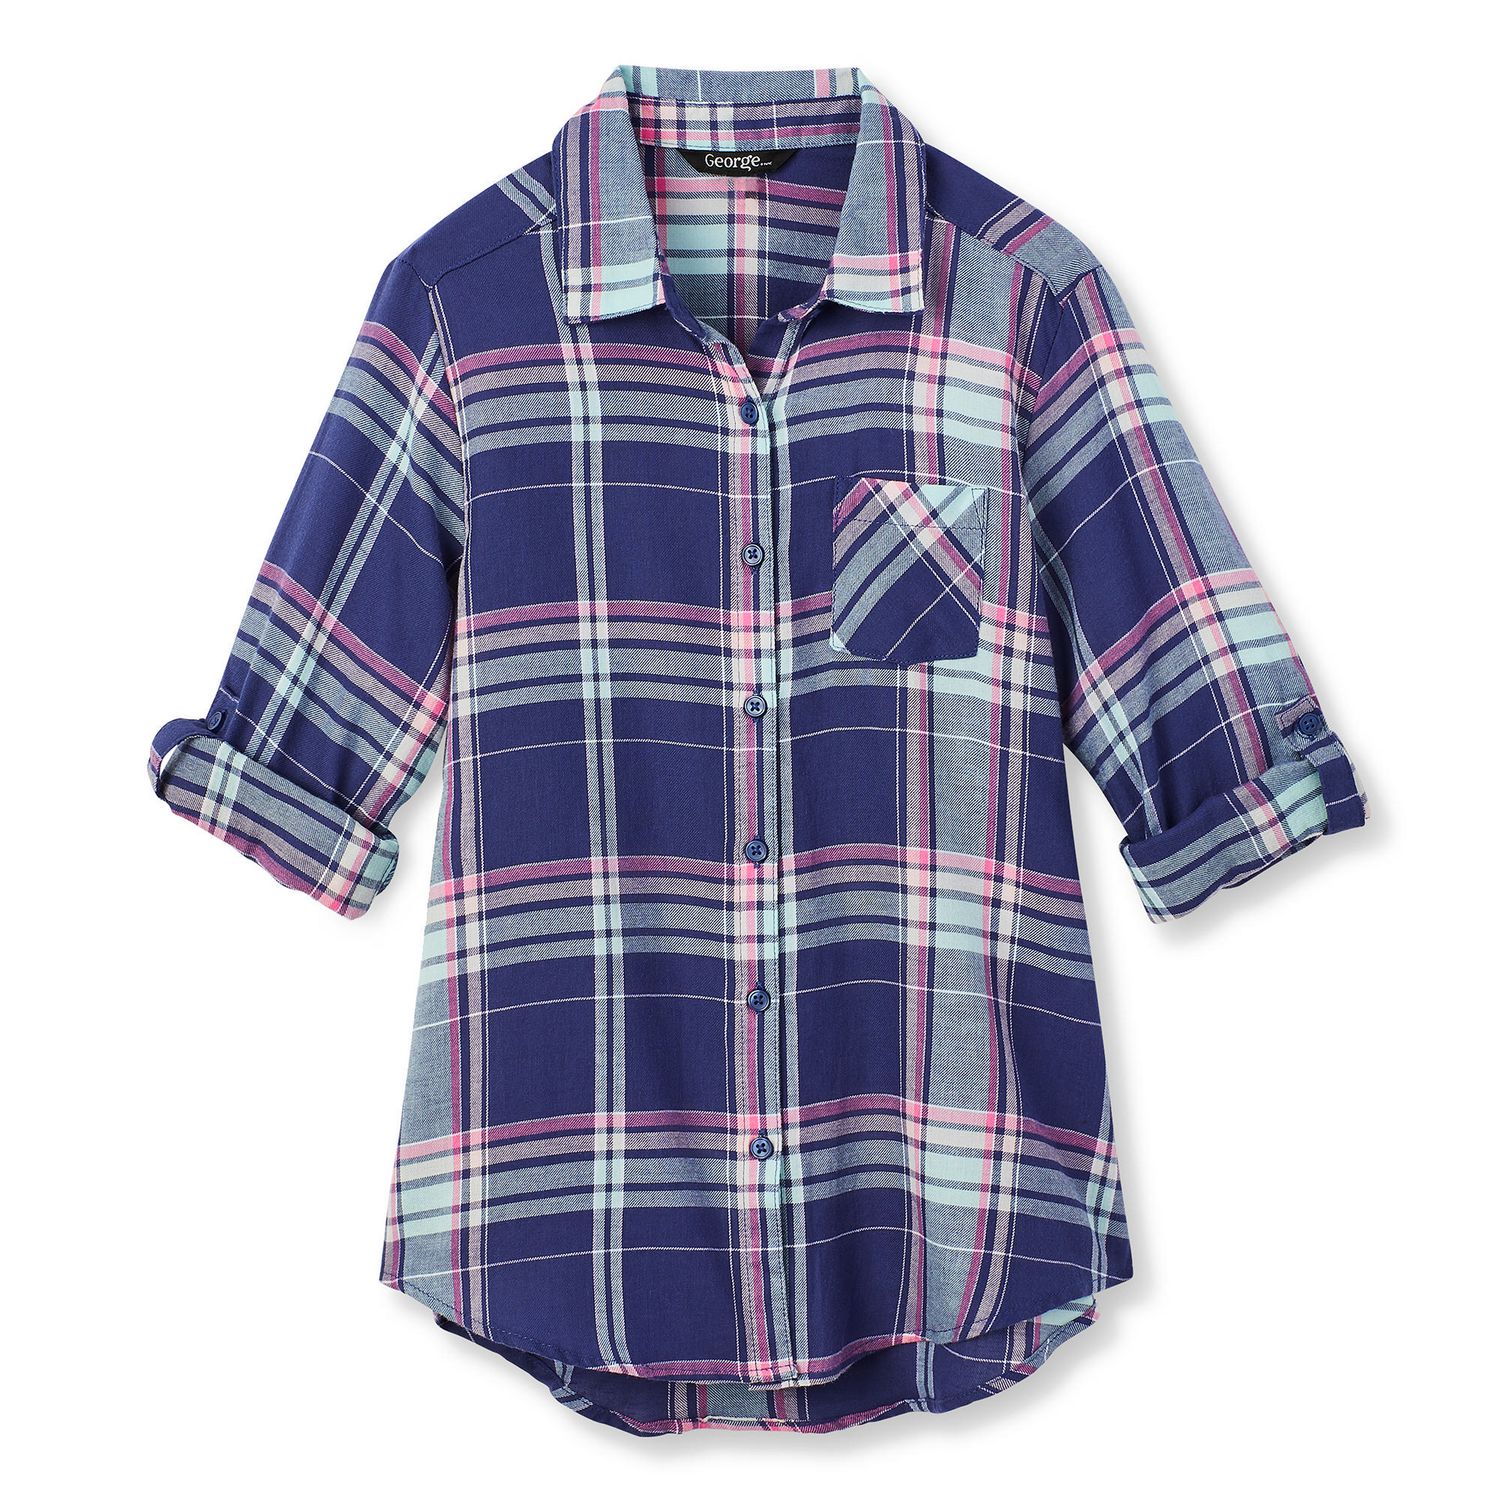 George Girls' Plaid Shirt | Walmart Canada